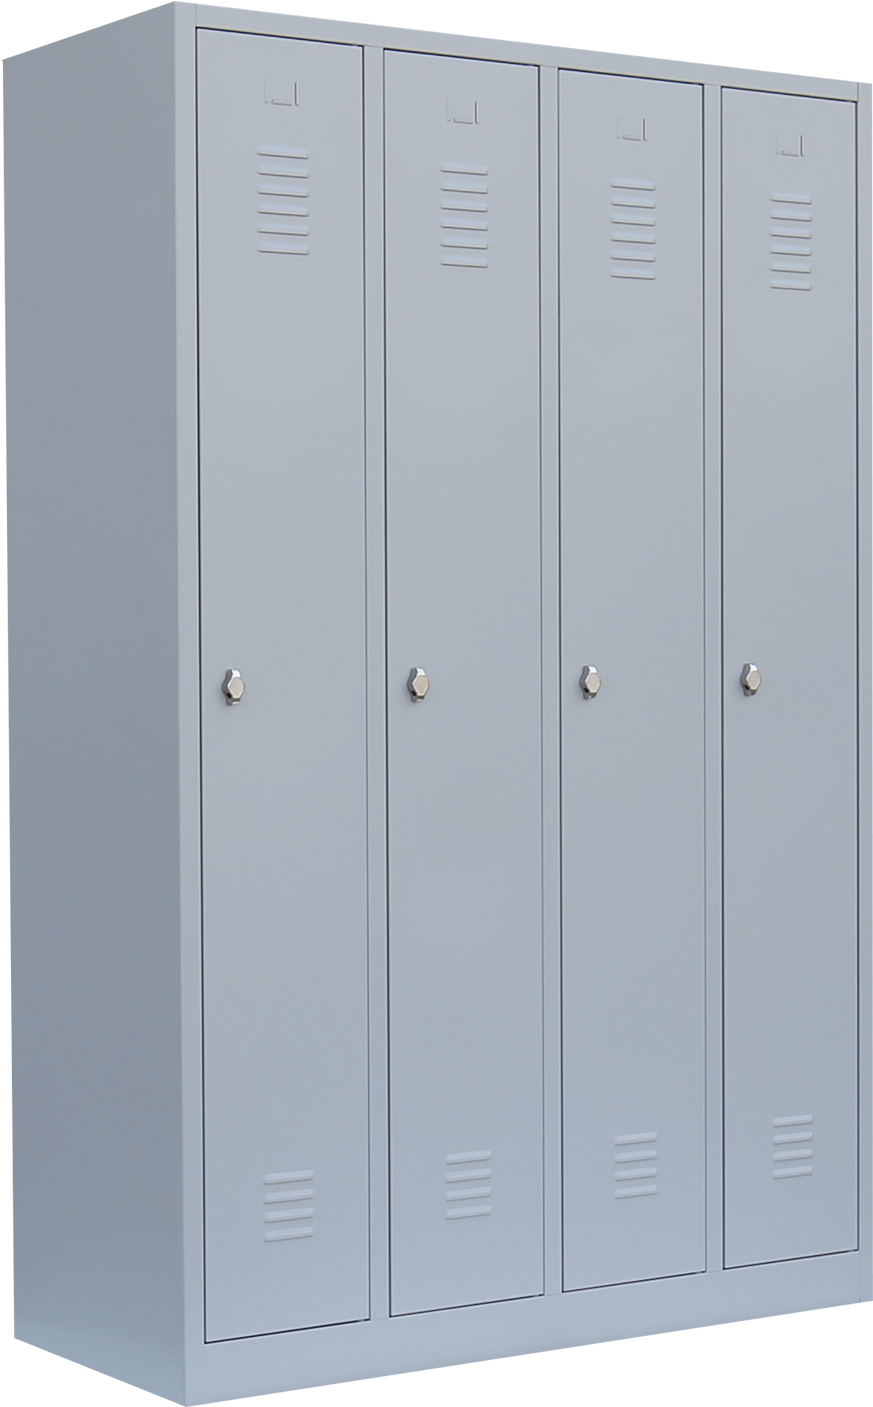 Blue Metal Lockers PNG image